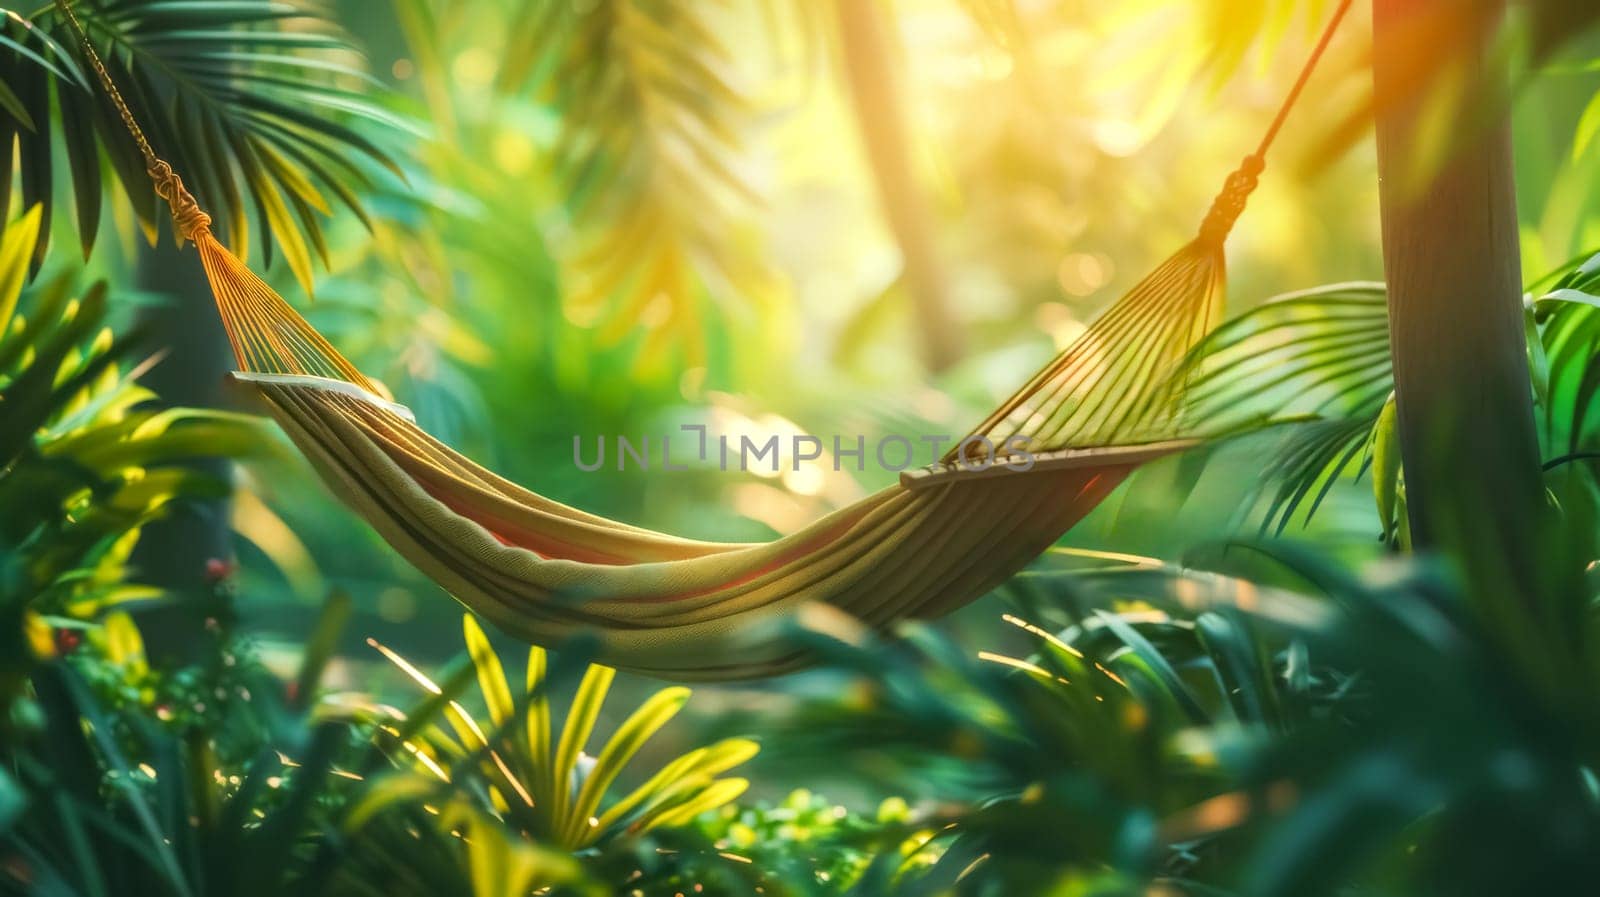 Tranquil hammock sways among lush greenery in the warm glow of a setting sun